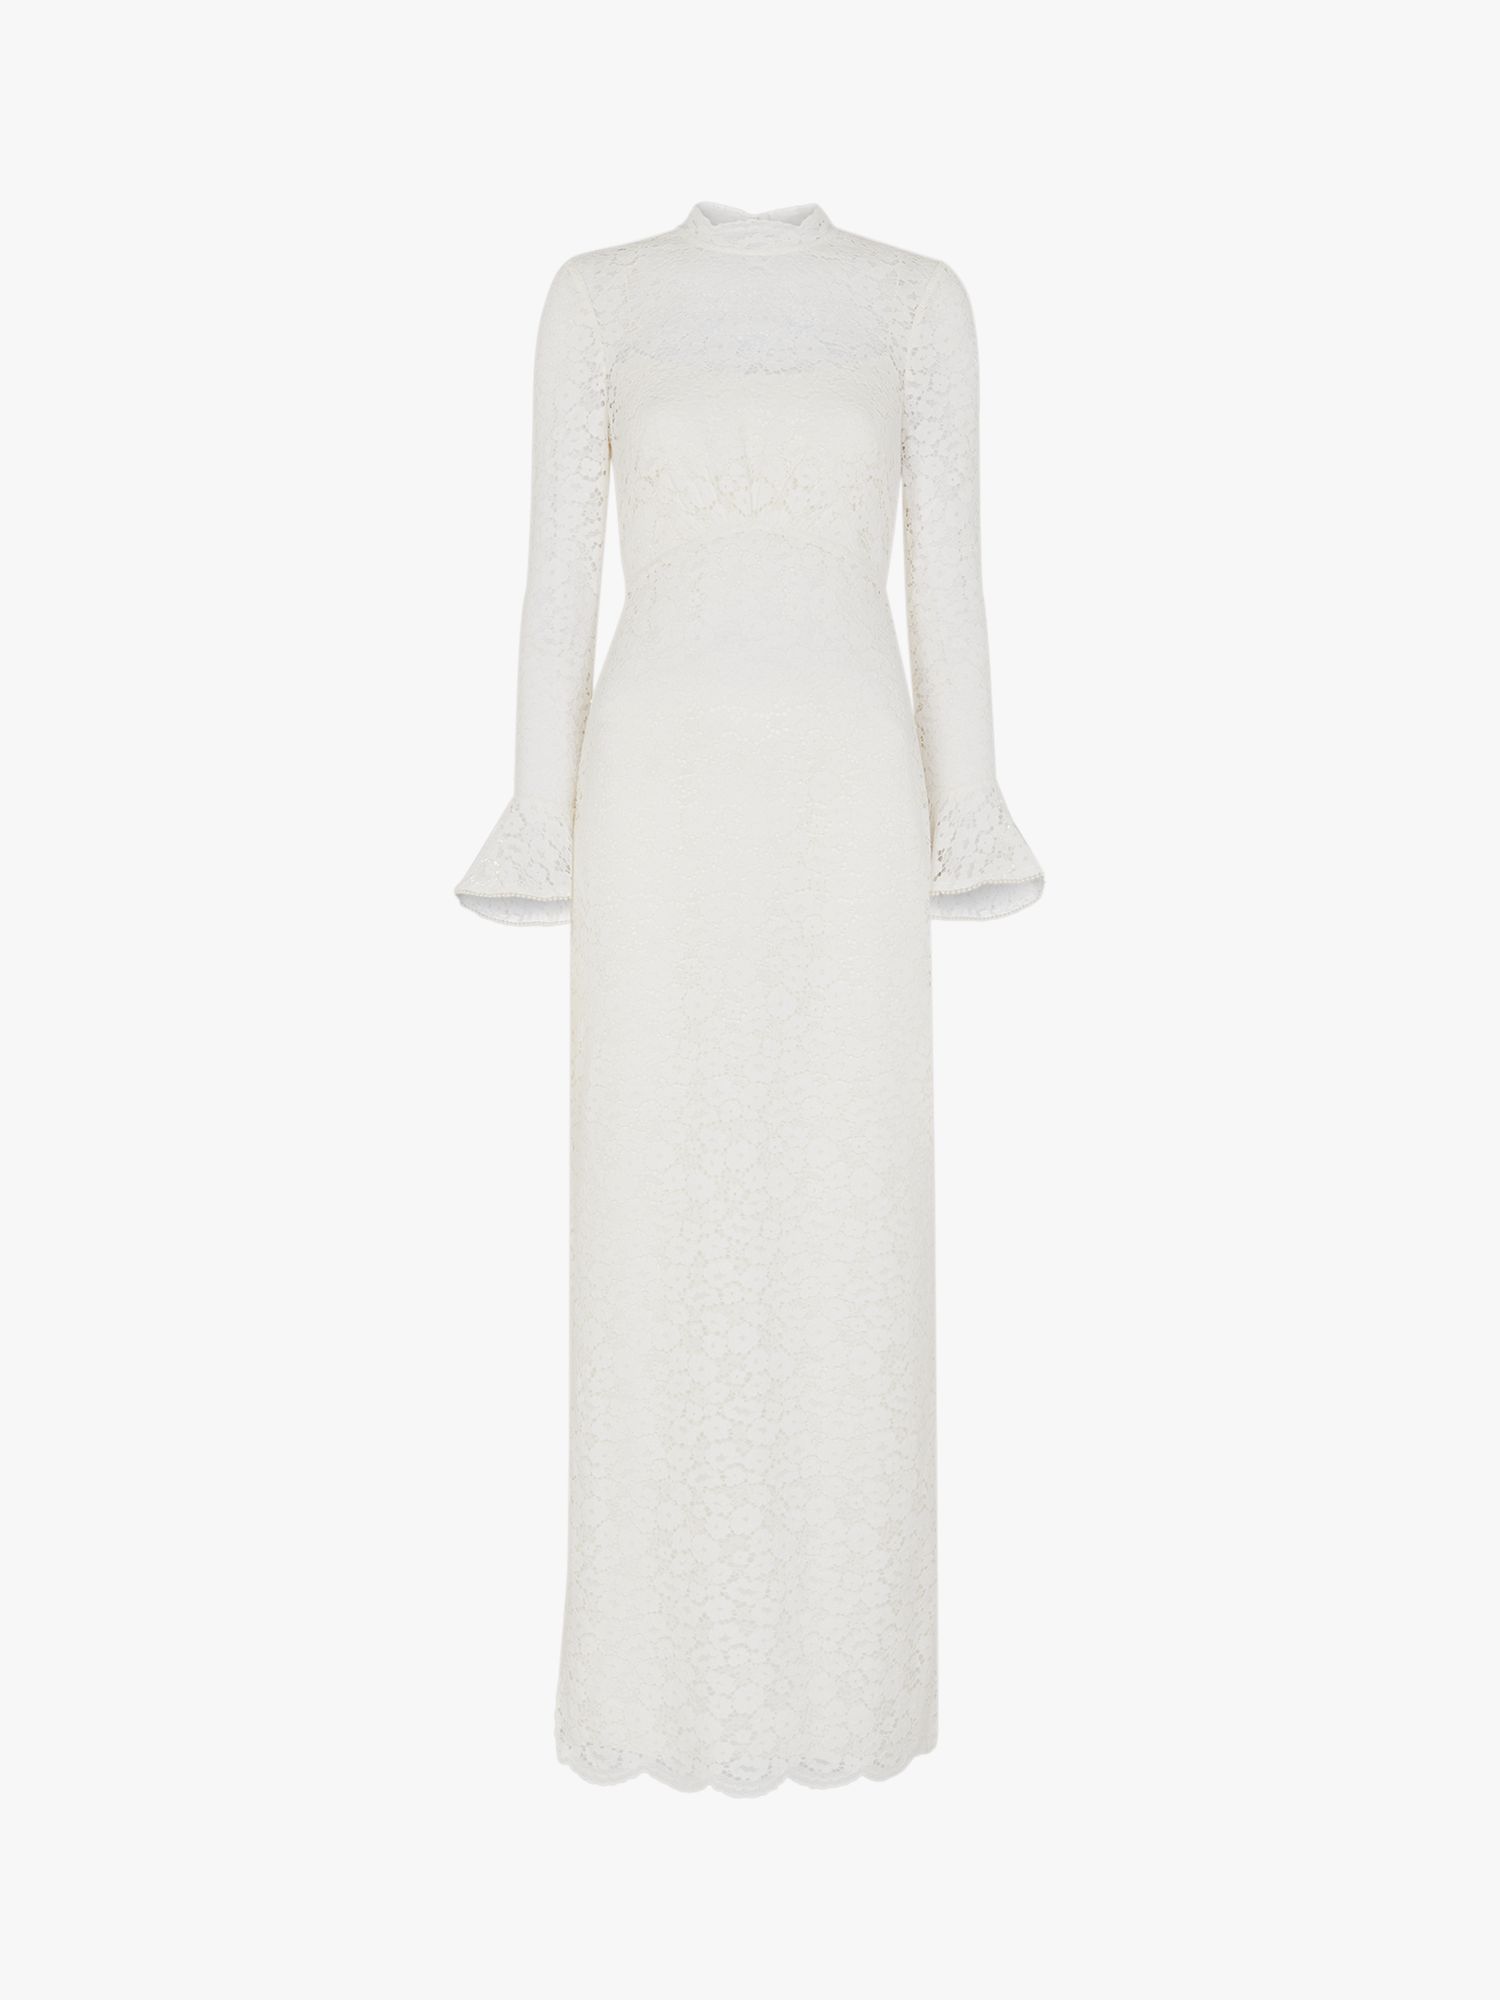 Whistles Frances Lace Wedding Dress, Ivory at John Lewis & Partners